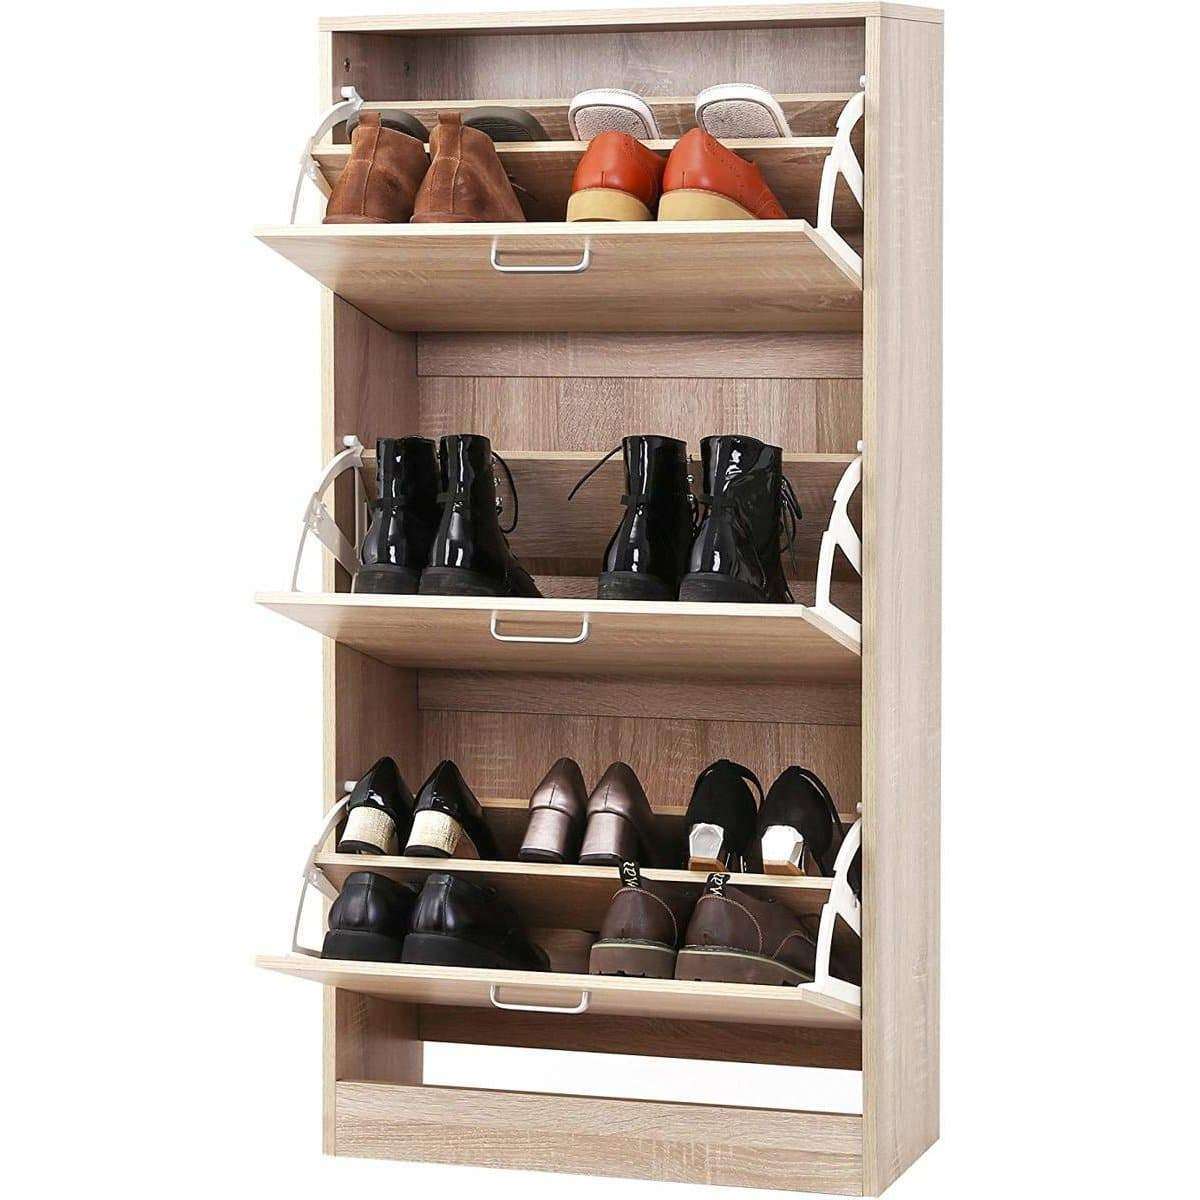 Nancy's Oak Wooden Shoe Cabinet - Shoe Rack - Shoe Cabinets for 18 Pairs of Shoes